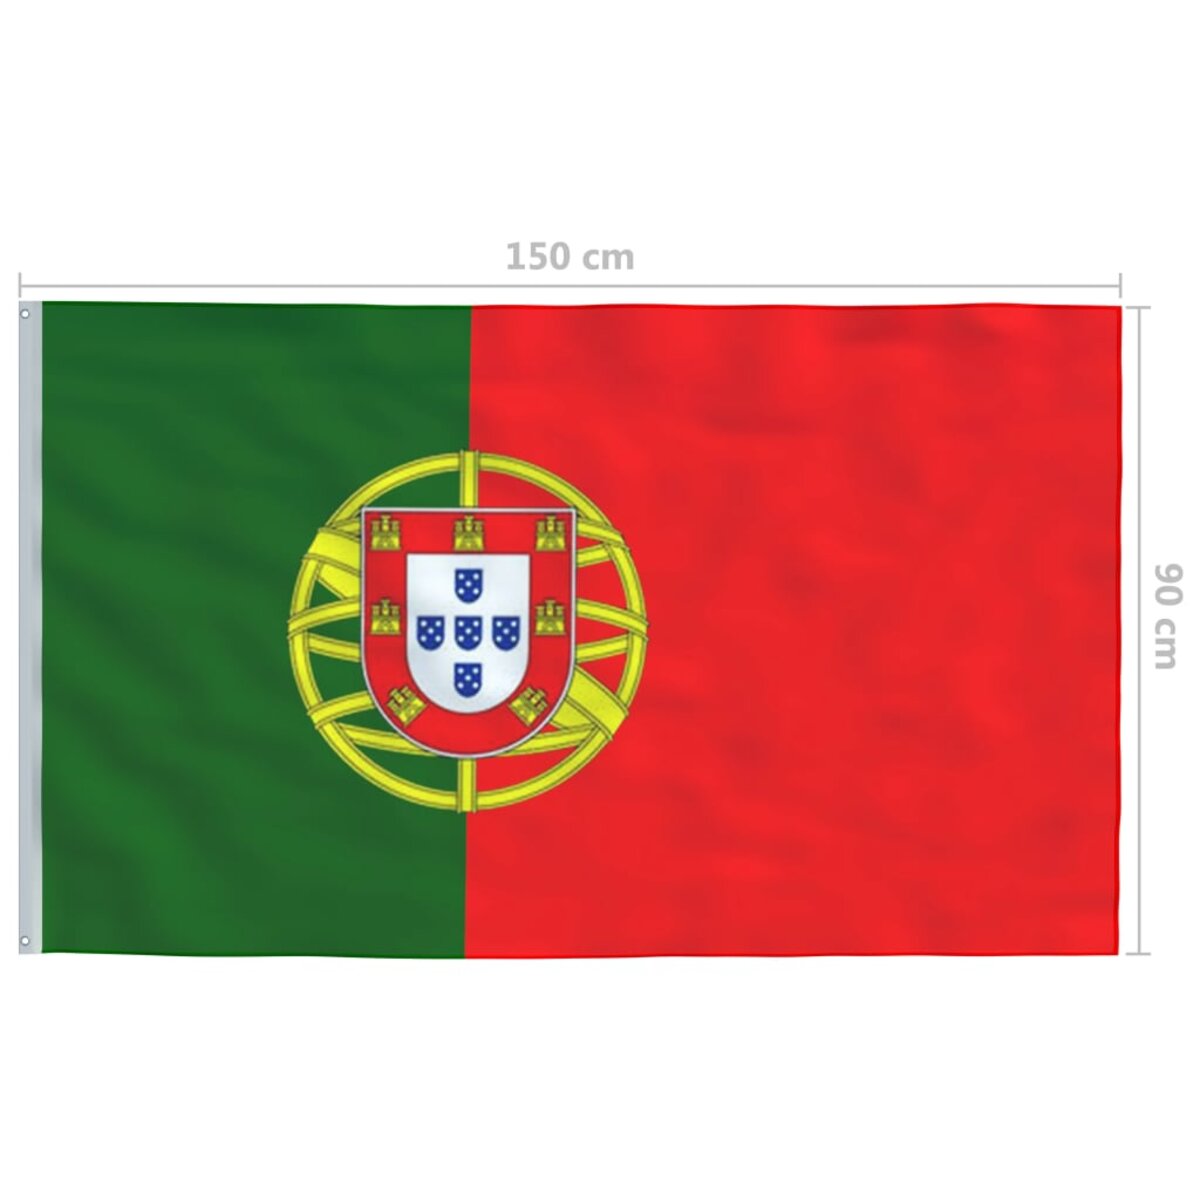 Pin's JO 2024 - Drapeau Portugal